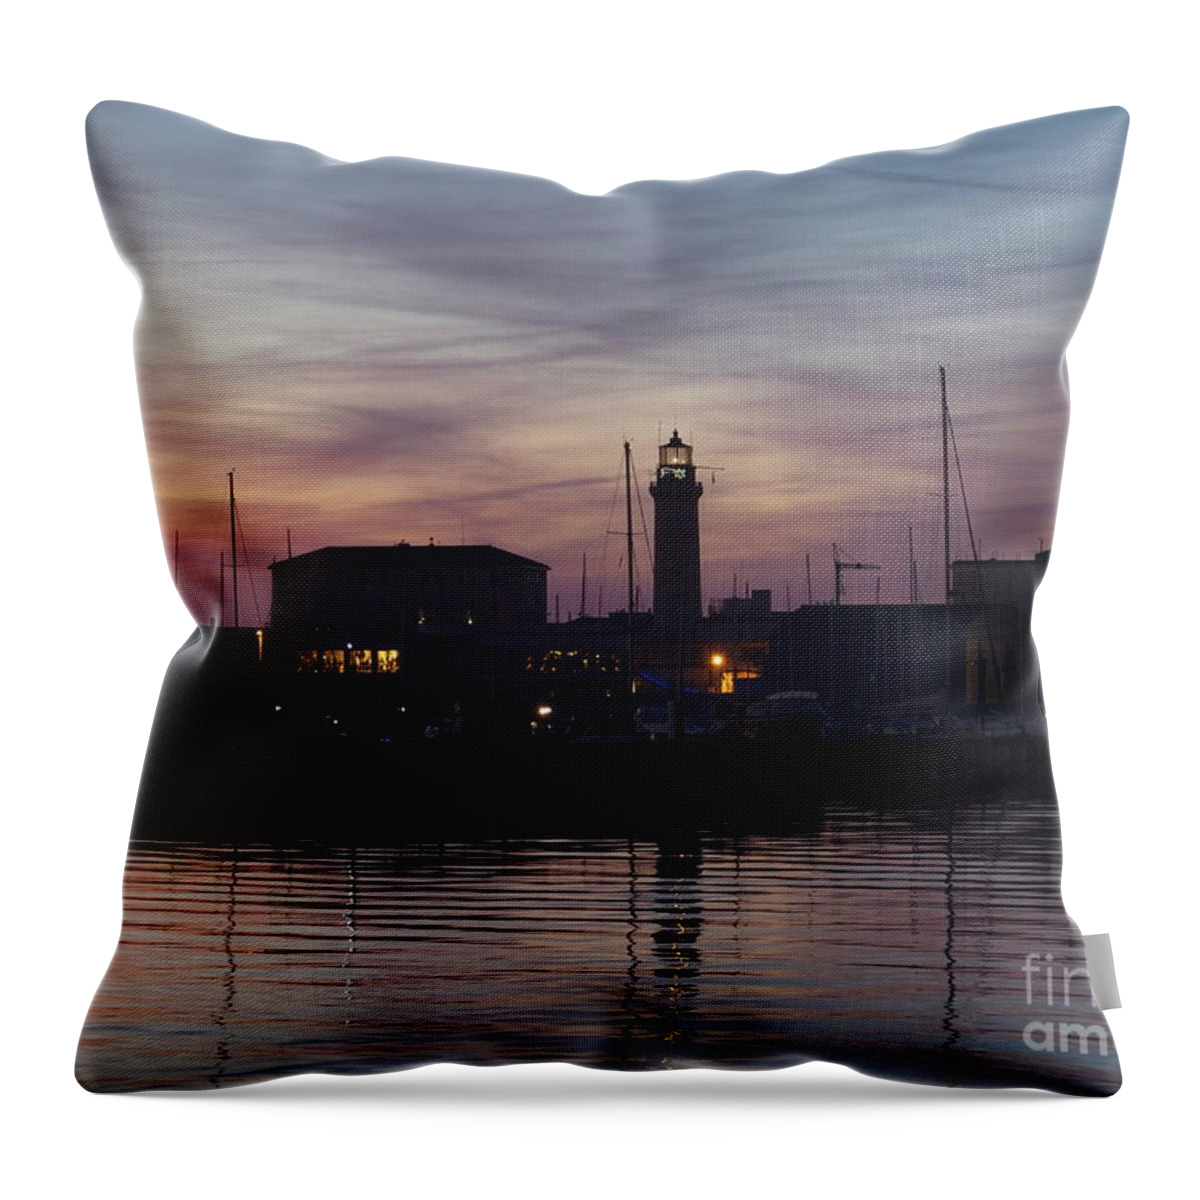 Lanterna Throw Pillow featuring the photograph Lanterna at dusk by Riccardo Mottola